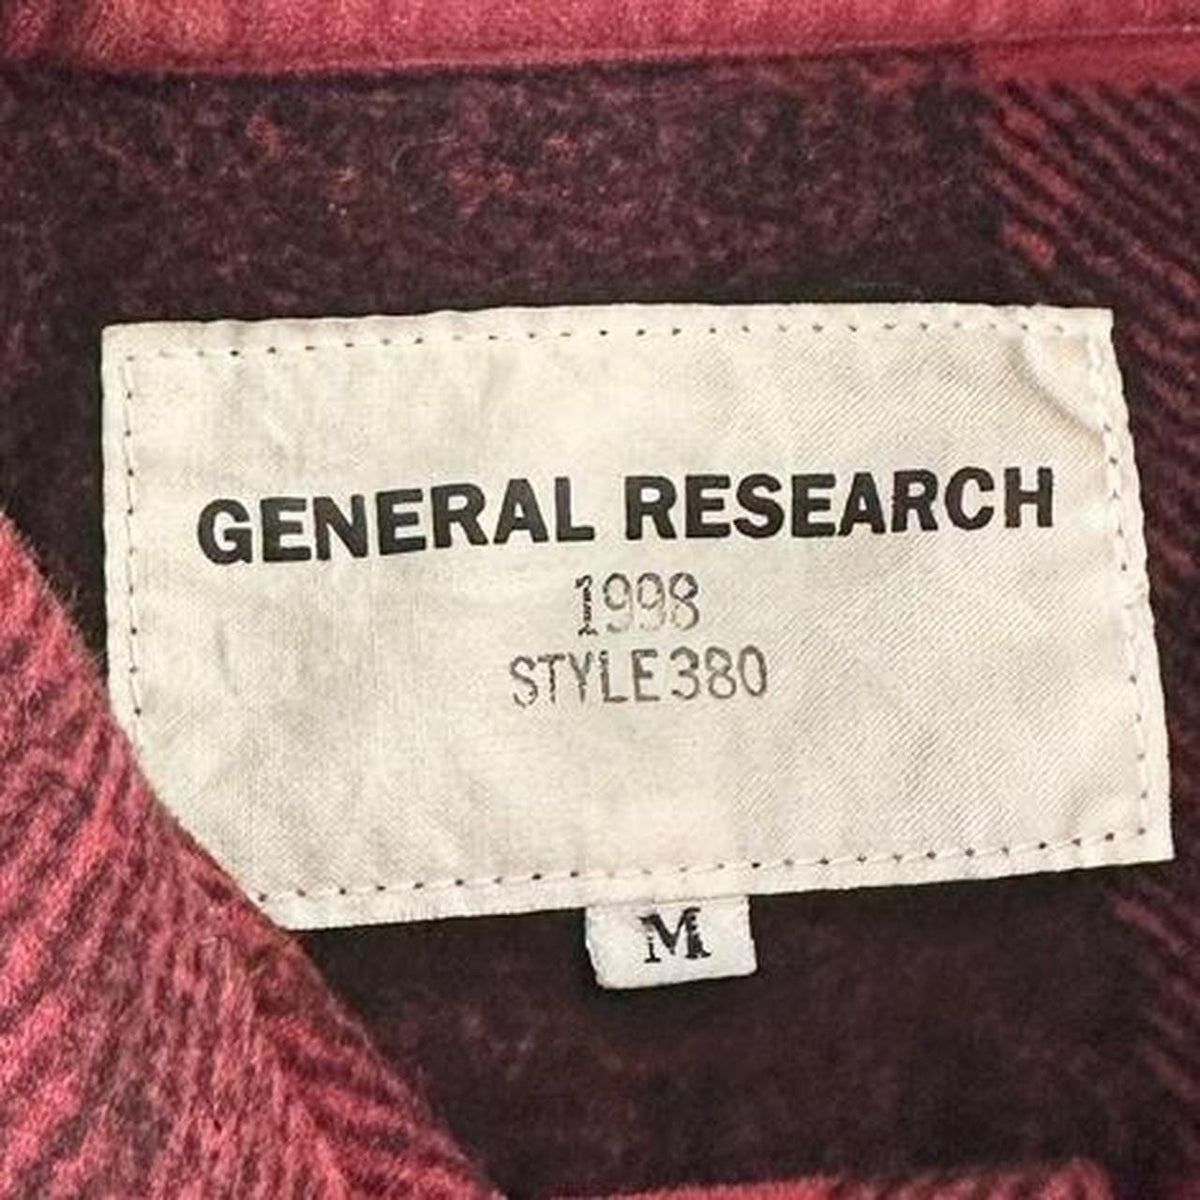 General Research multi pocket button shirt size M